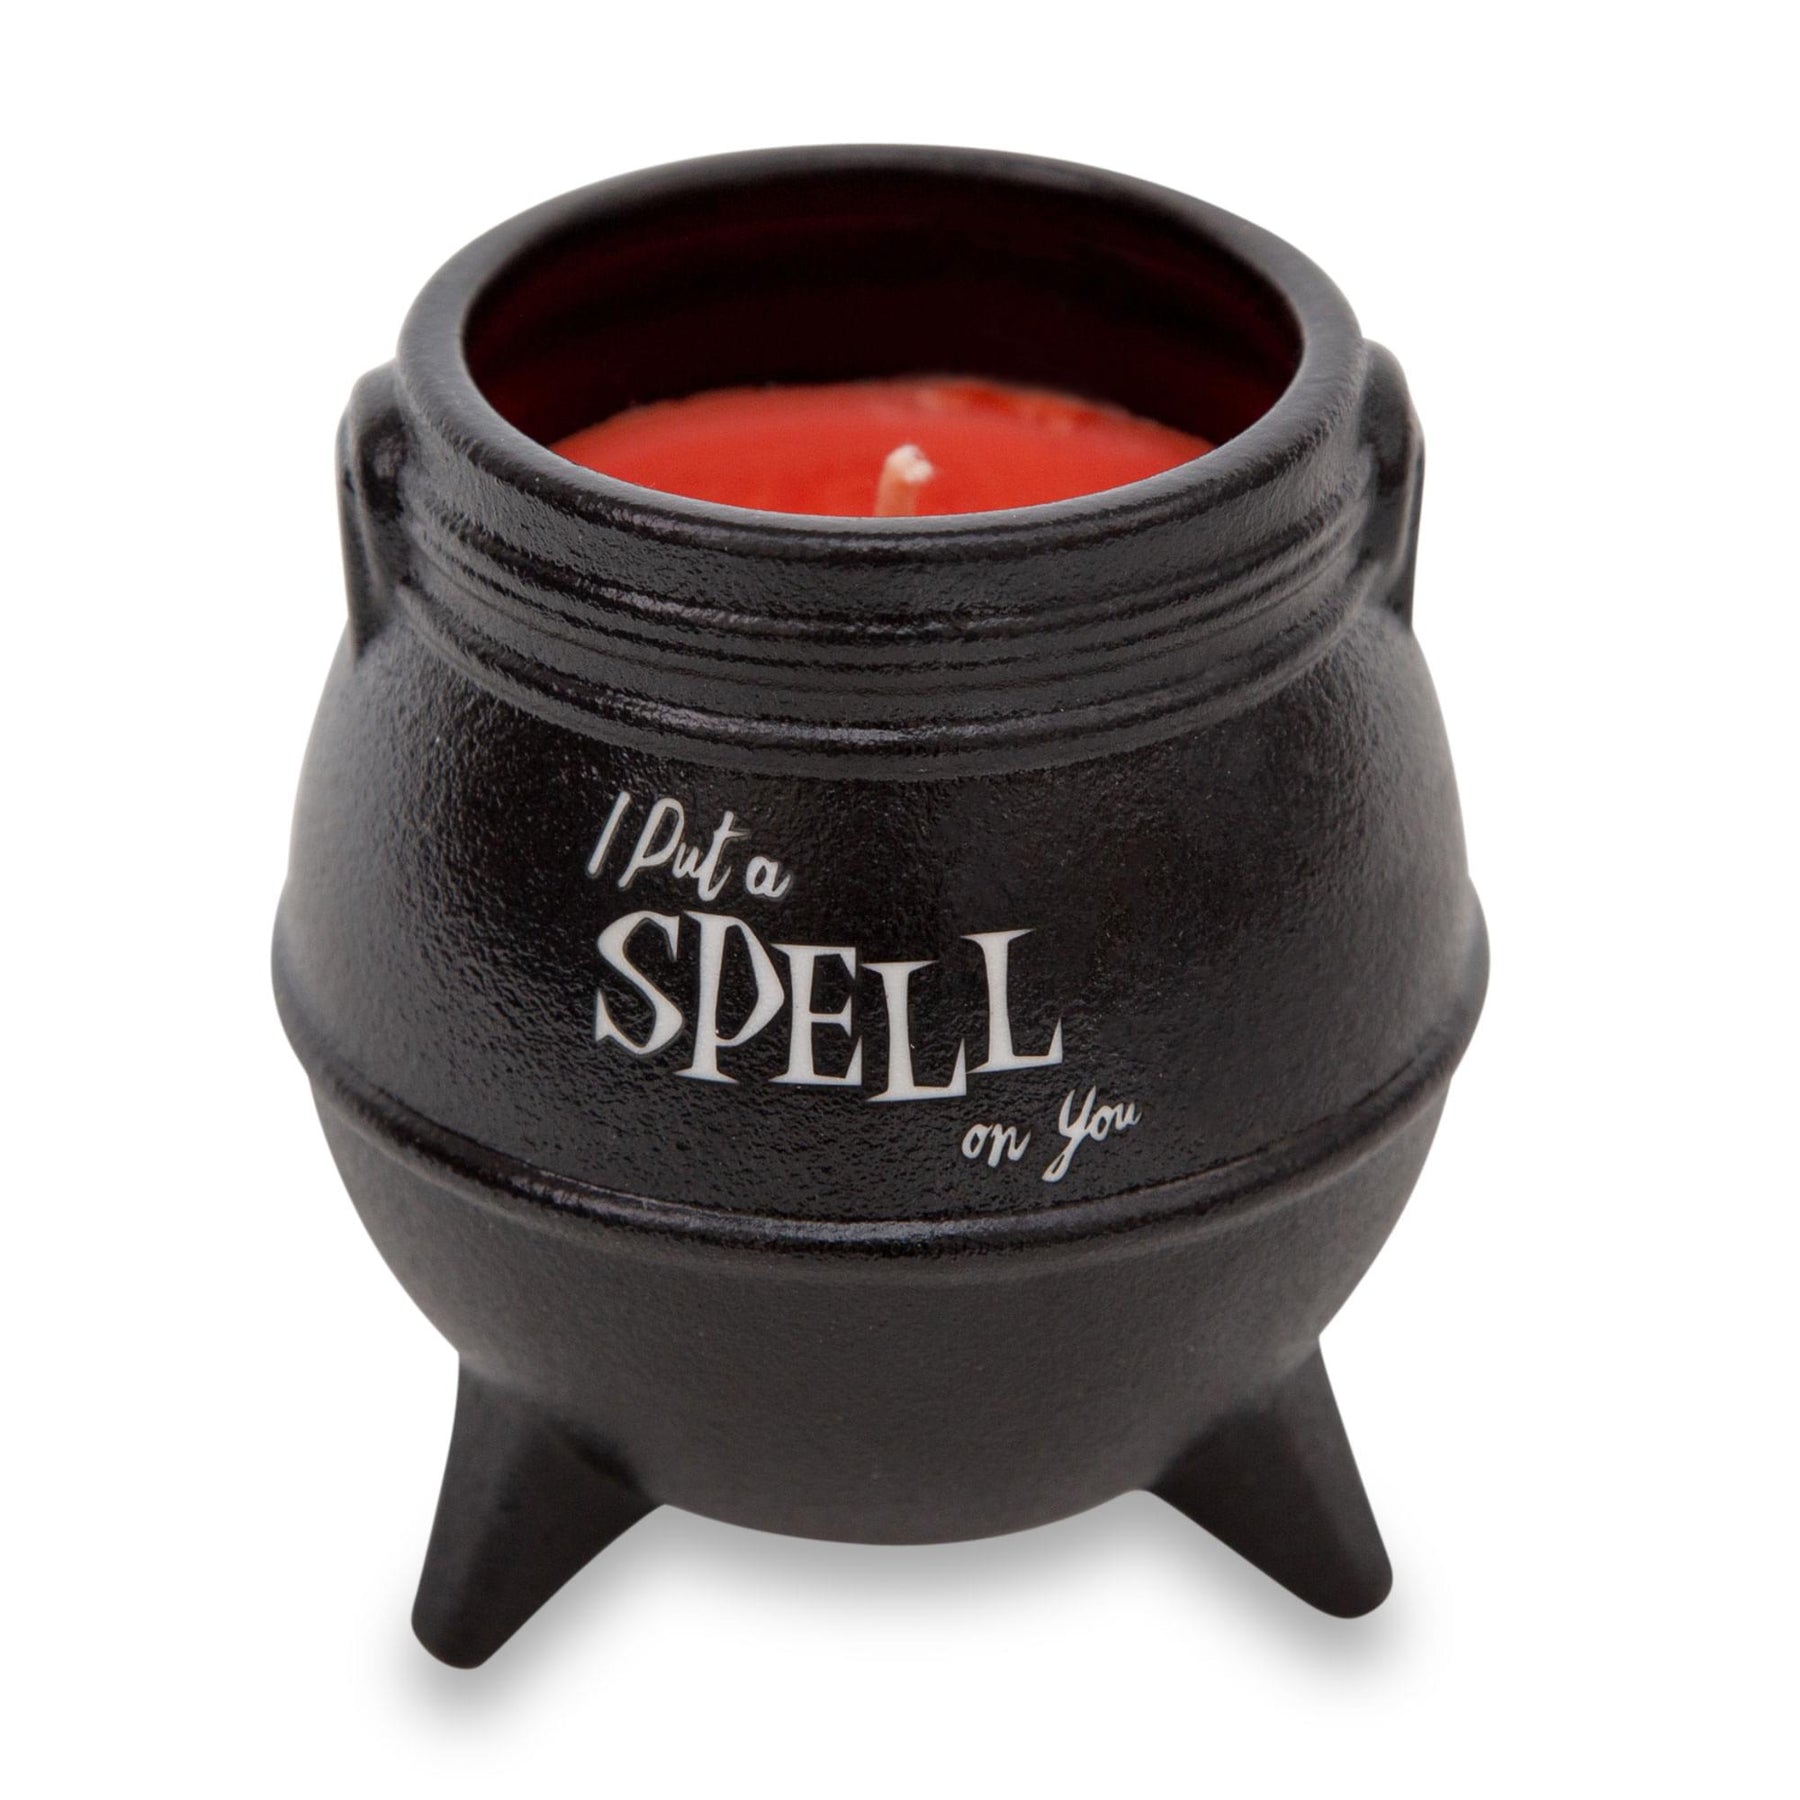 Disney Hocus Pocus "I Put A Spell On You" Ceramic Cauldron Candle